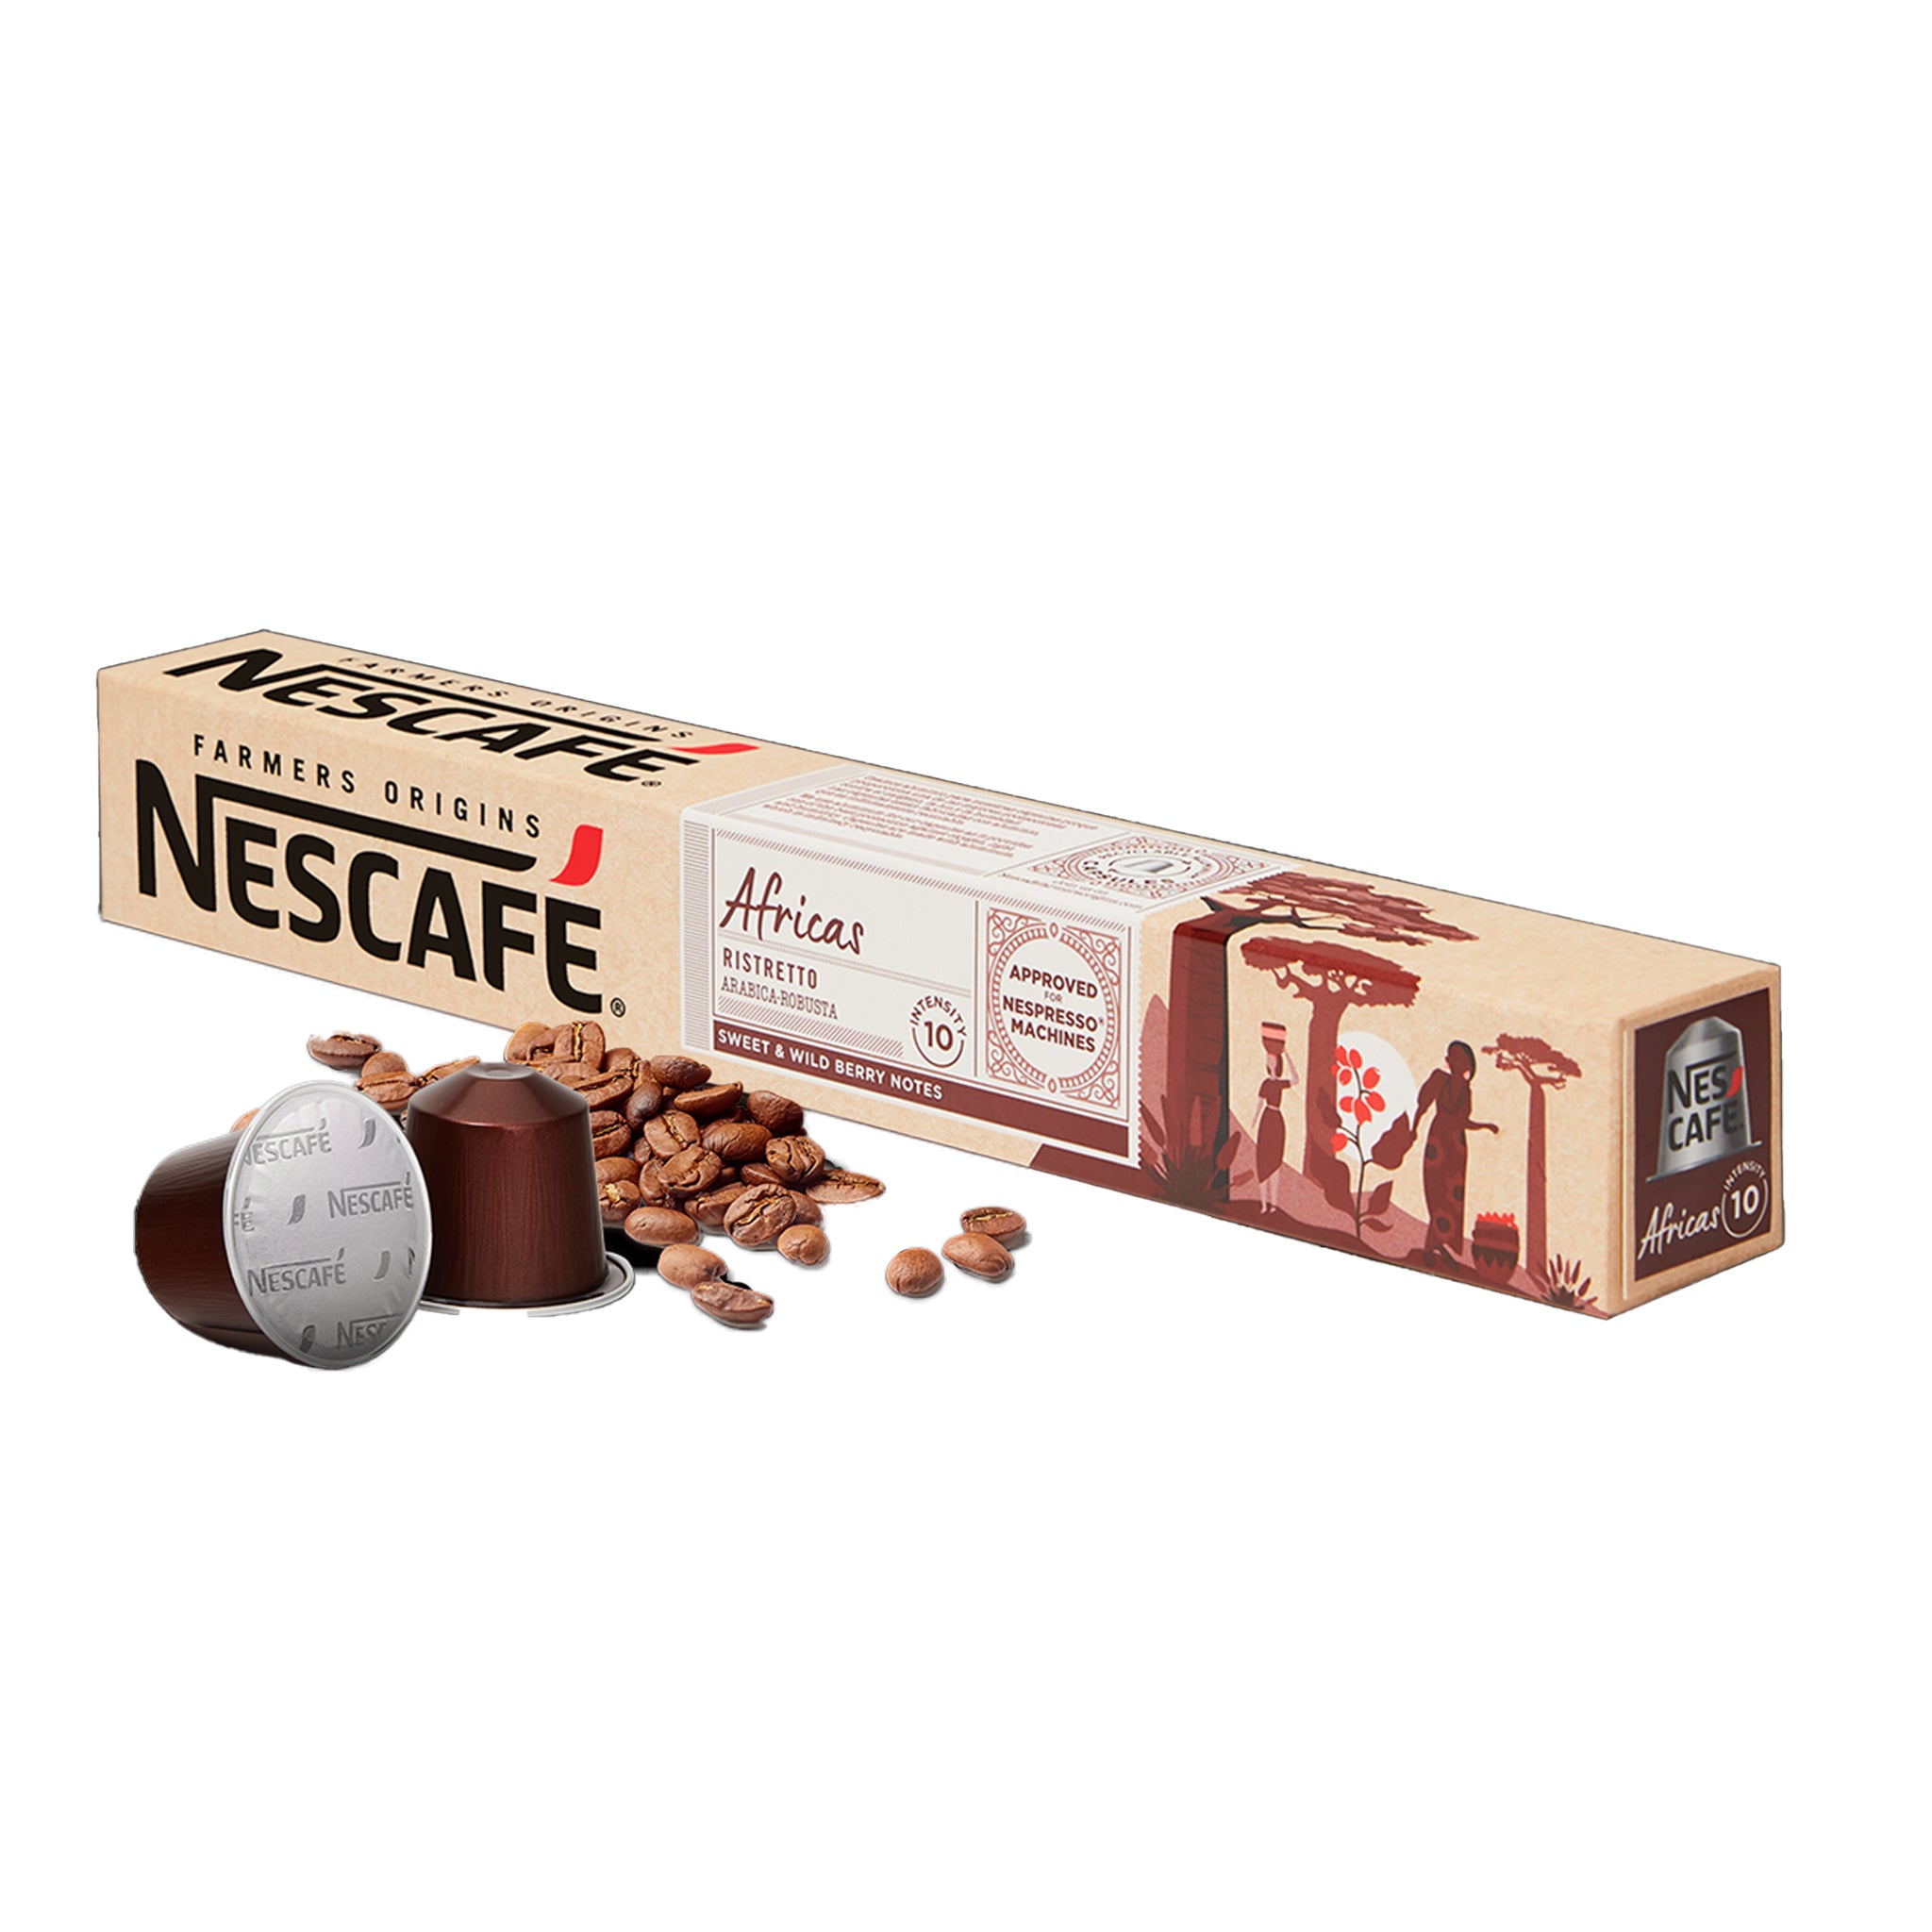 Nescafe Farmers Origins Africas  קפסולות נסקפה אפריקה